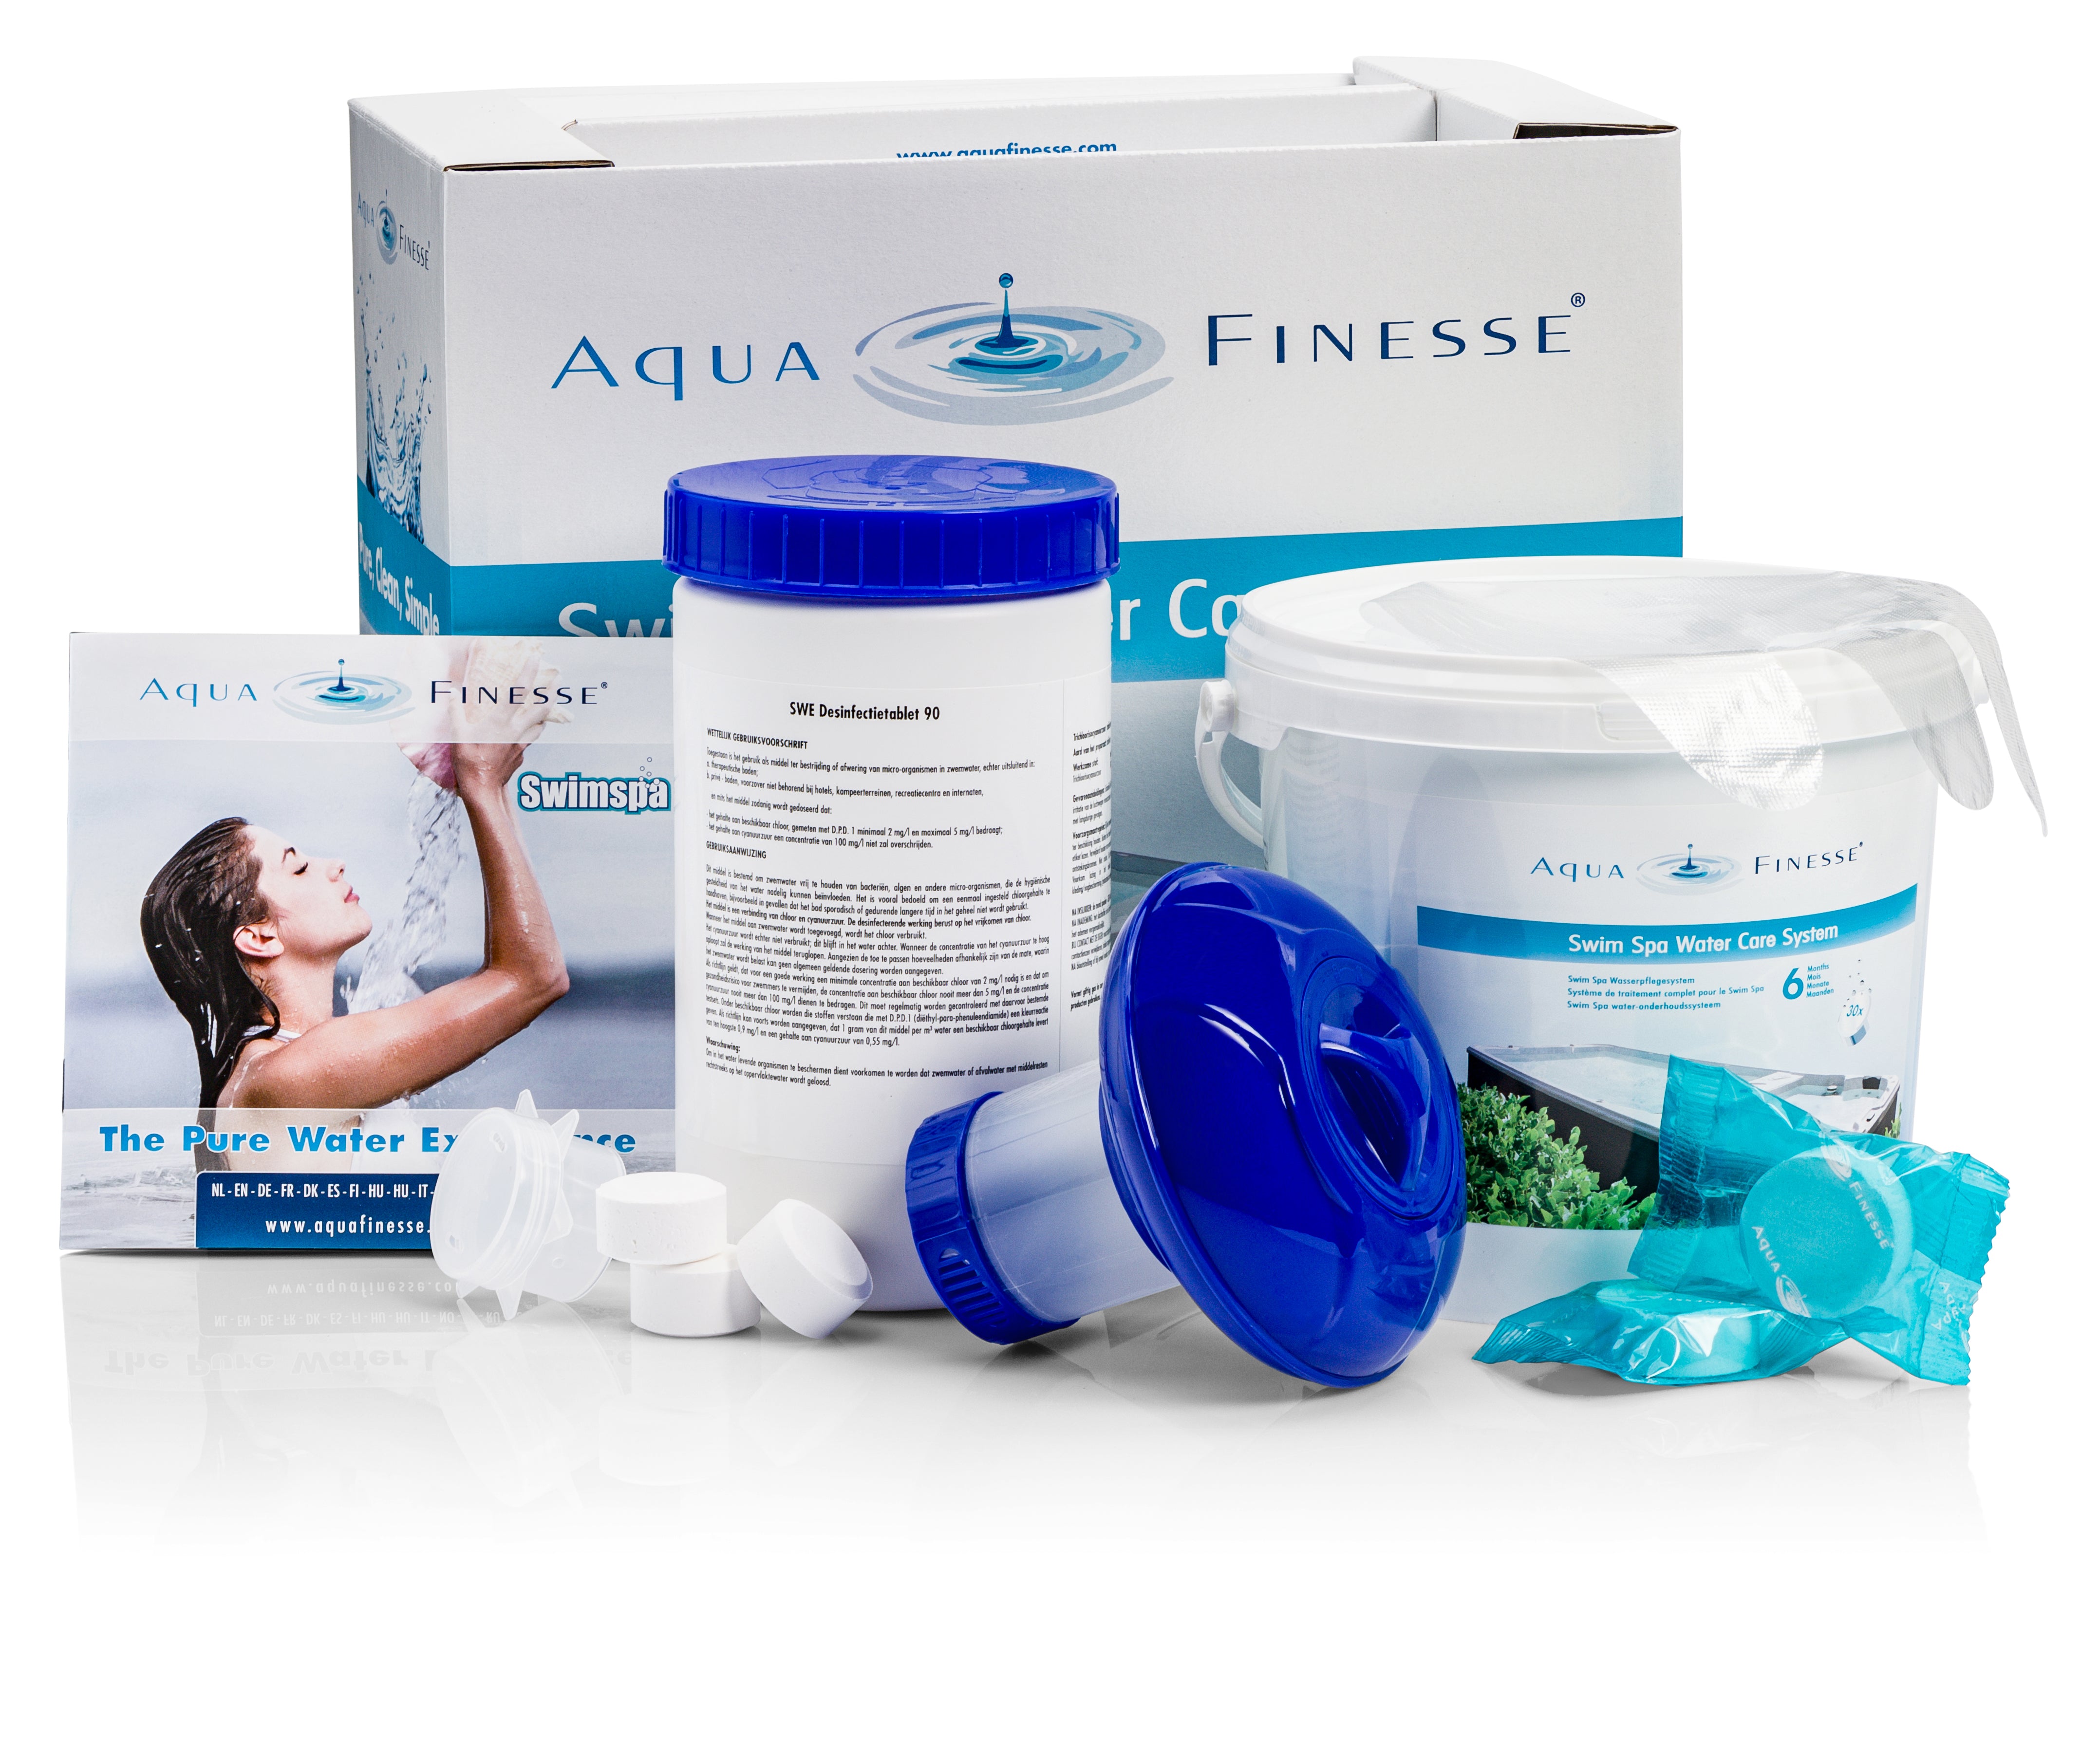 AquaFinesse pakket voor SwimSpa